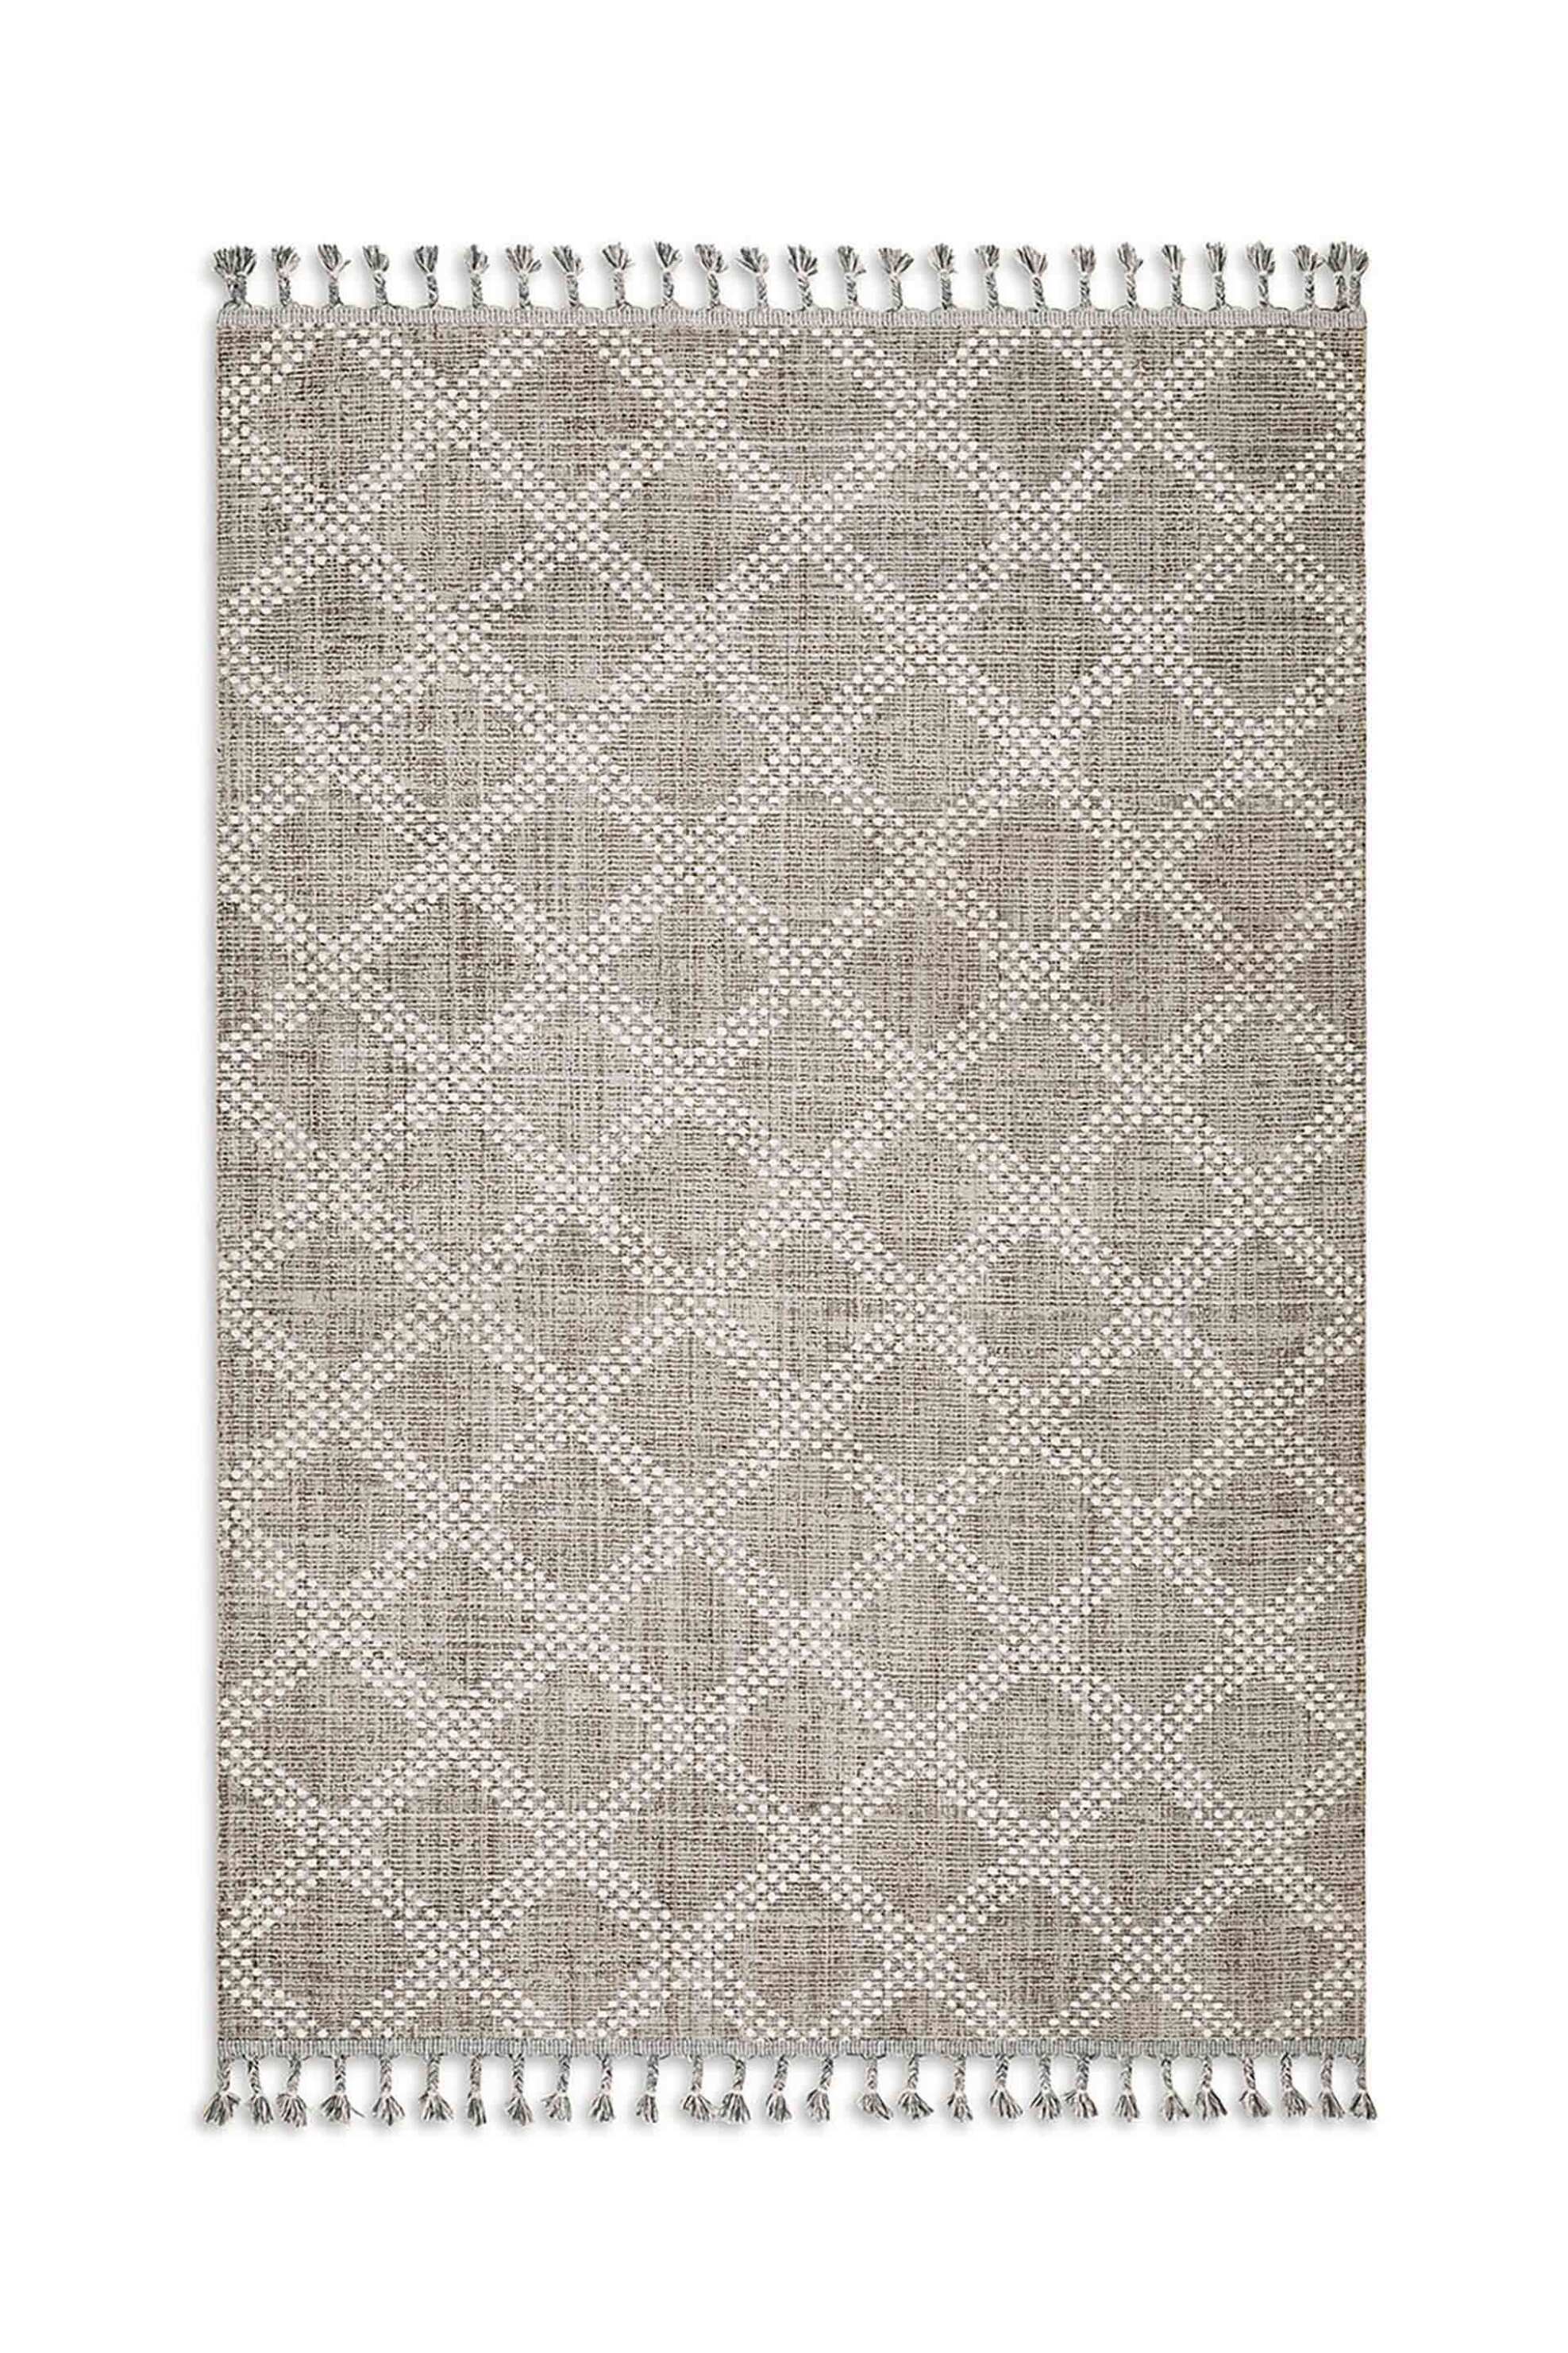 Coincasa χαλί με contrast geometric pattern και κρόσσια στο τελείωμα 180 x 120 cm - 007383717 Γκρι 2-7055003338|EE1793|